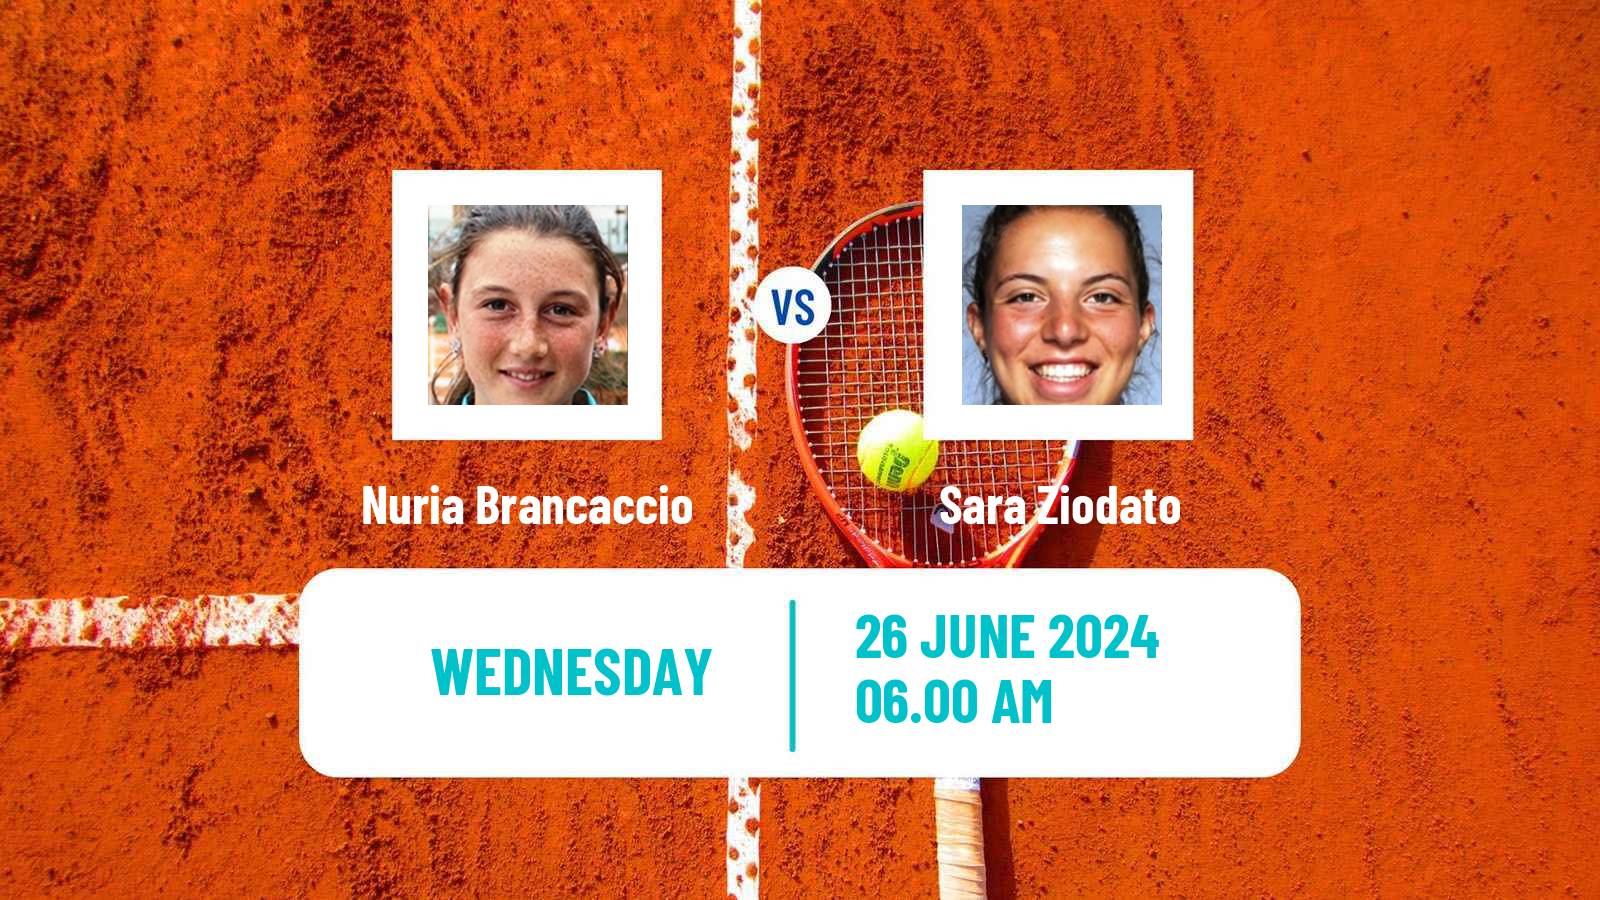 Tennis ITF W35 Tarvisio Women Nuria Brancaccio - Sara Ziodato